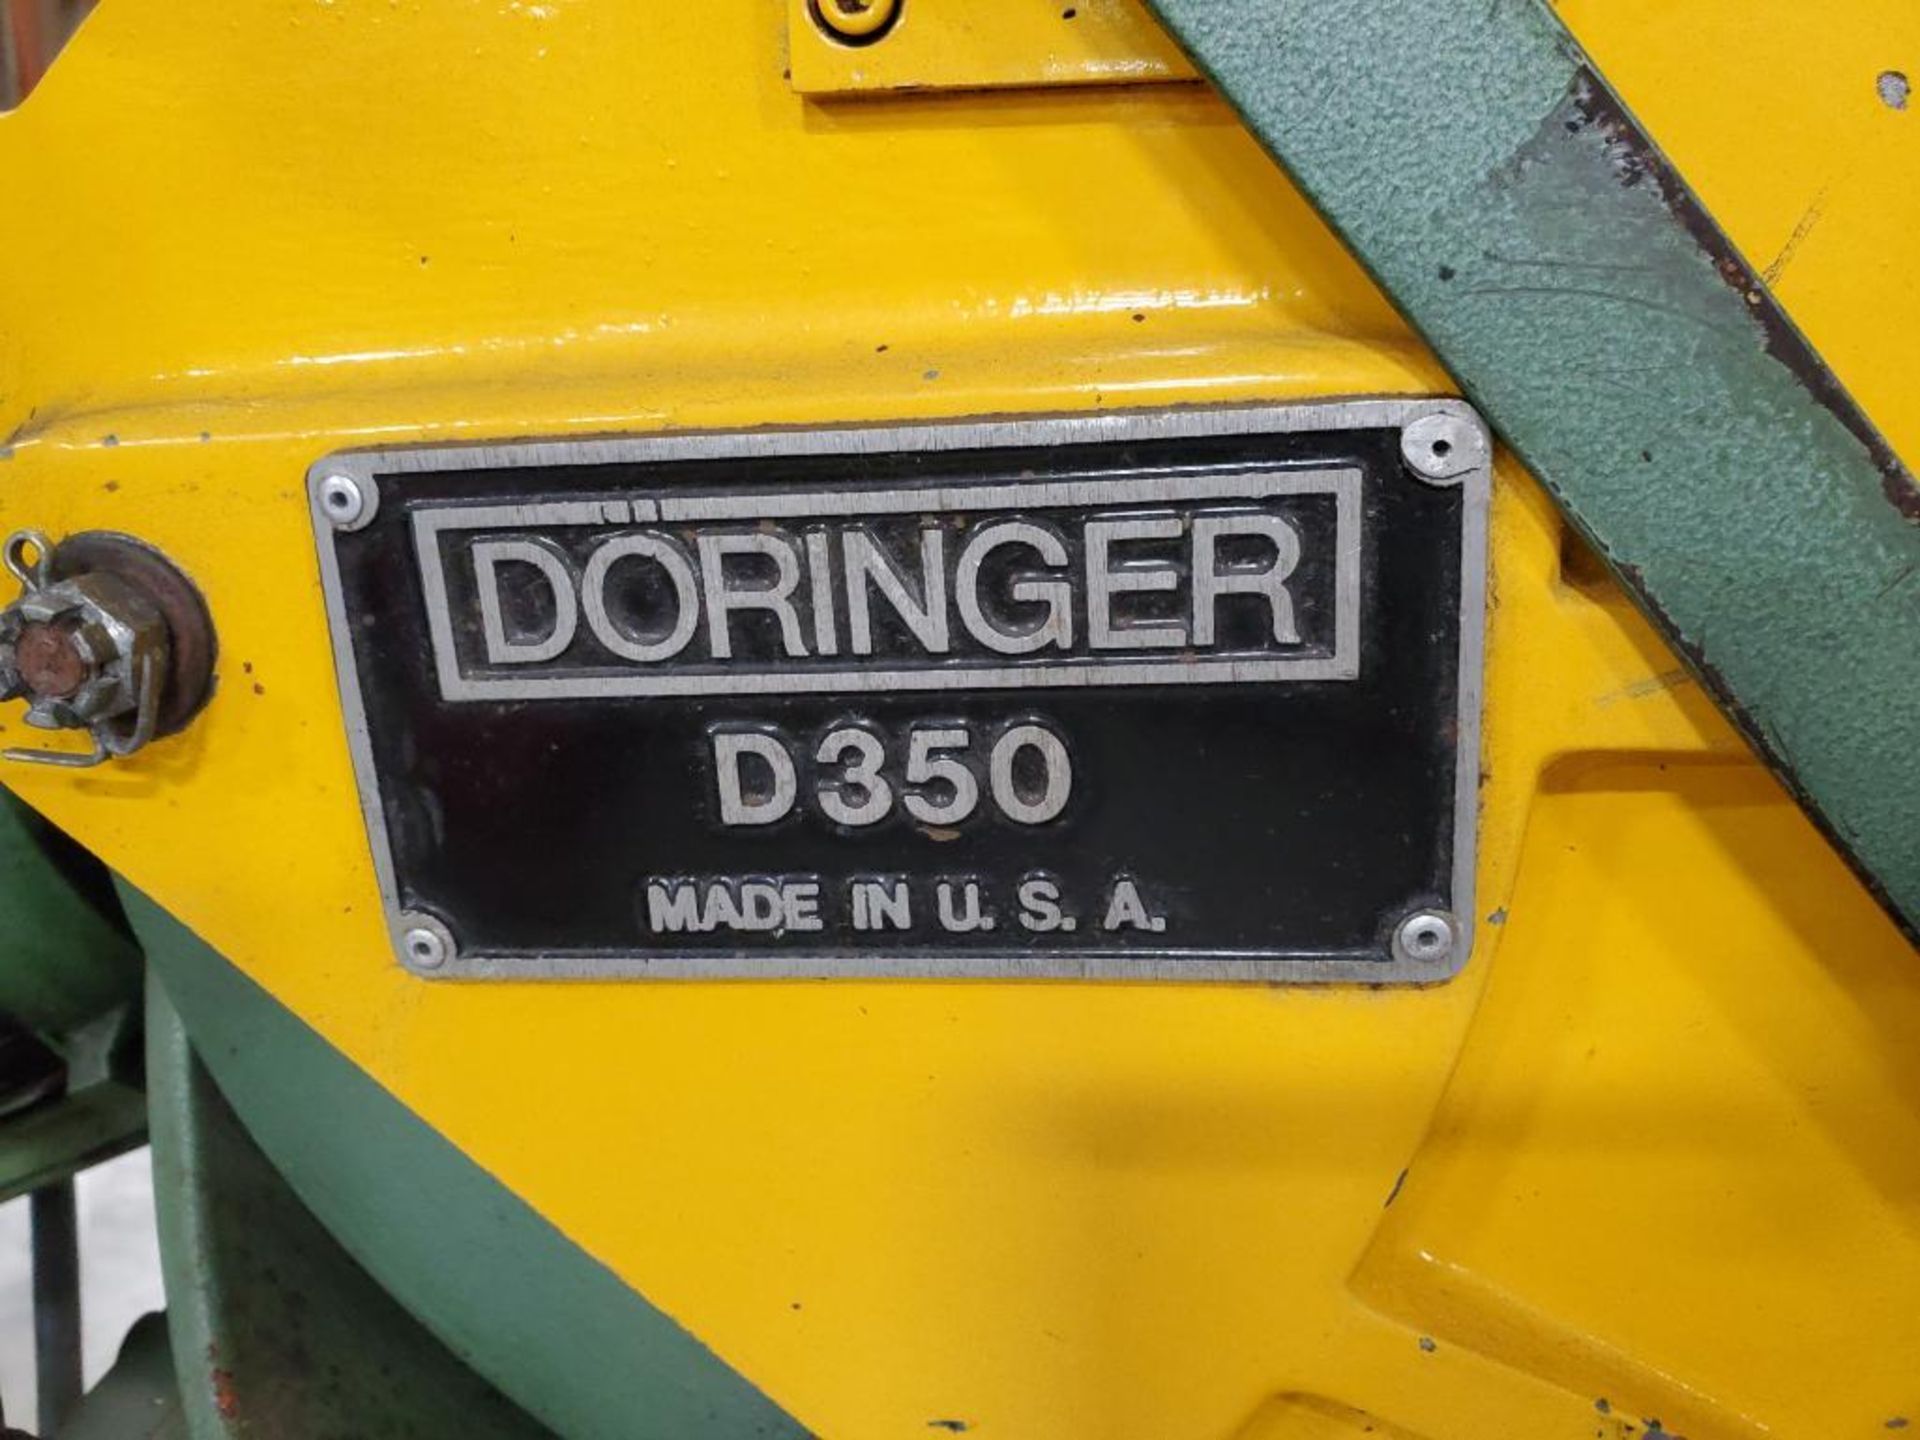 Doringer D350 cold saw with swivel base. - Image 8 of 11